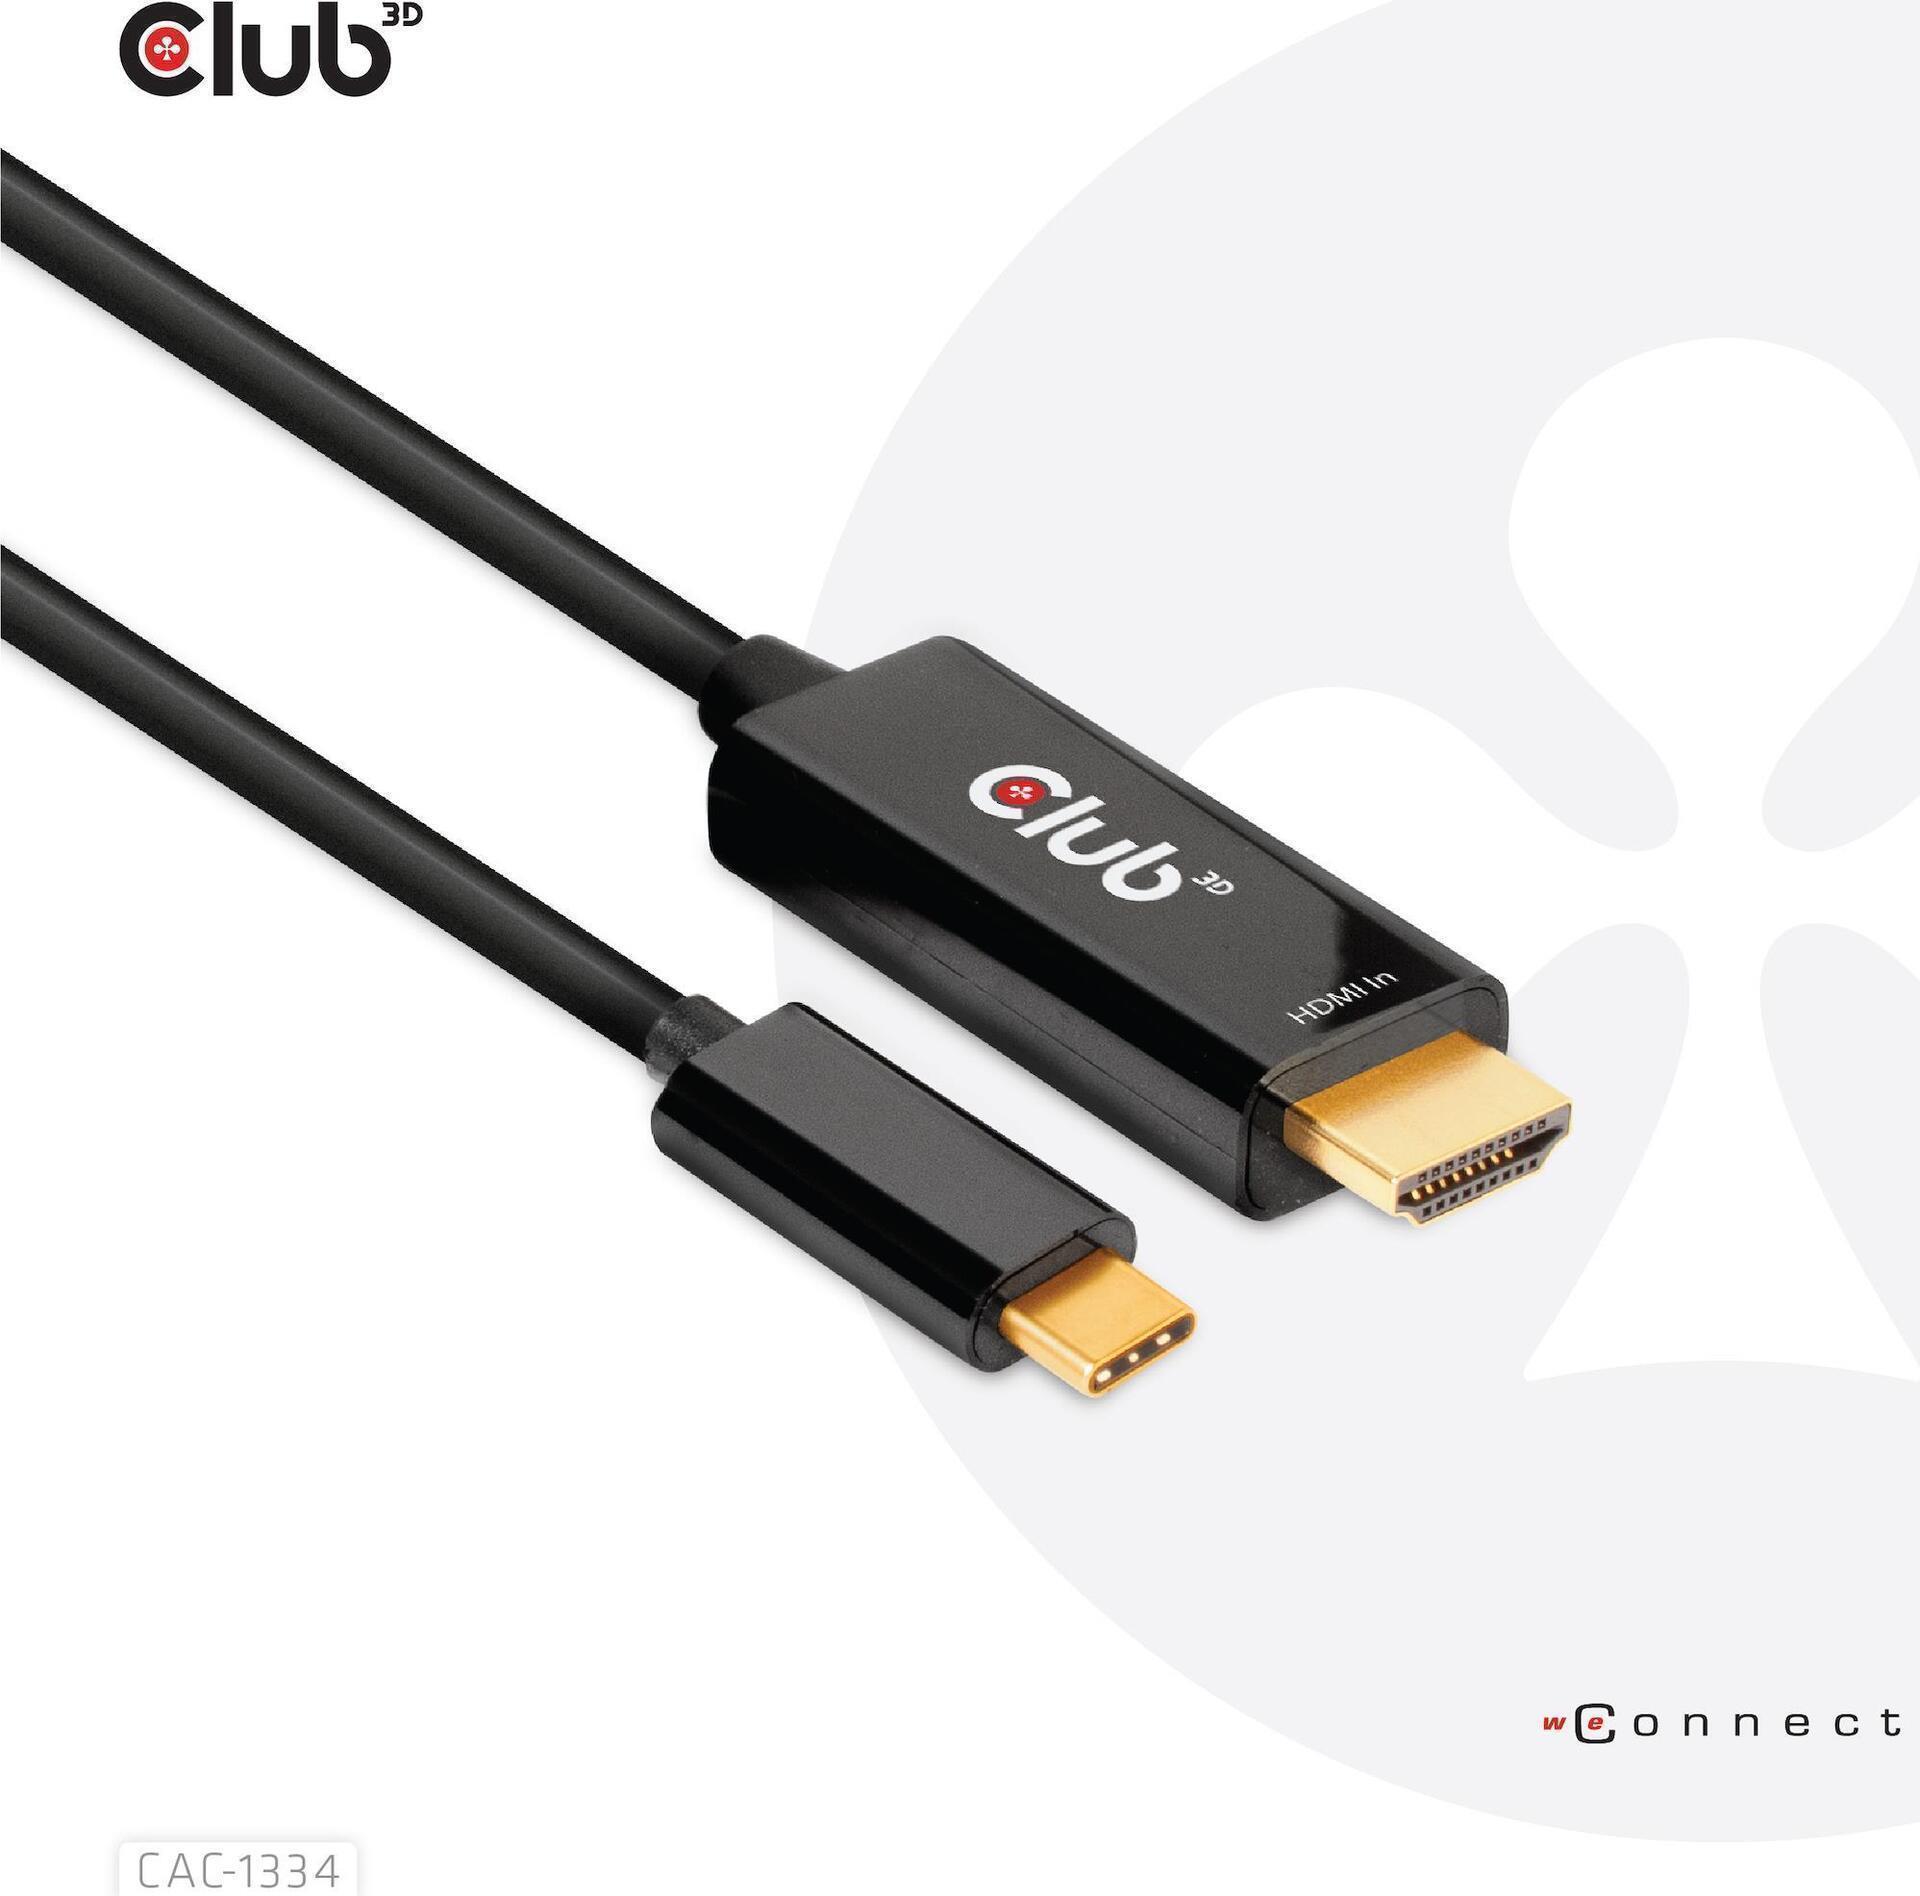 Club 3D Adapterkabel (CAC-1334)